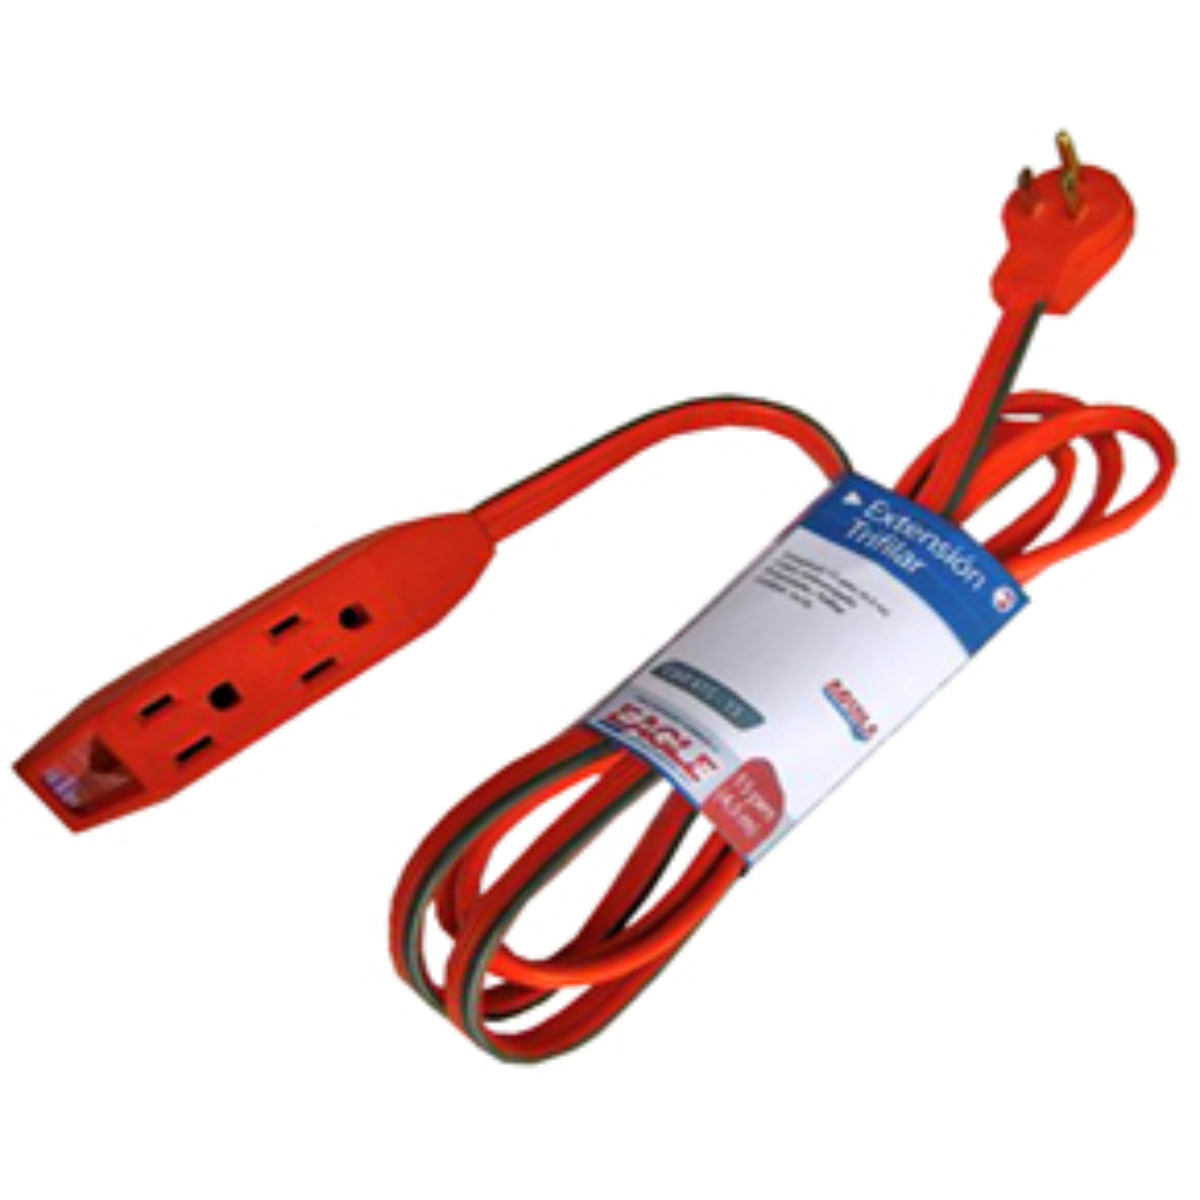 Prolongador de cable eléctrico, Varias medidas de cable (3 x 1,5 mm), Base Bipolar, Tarjeta de Fidelización